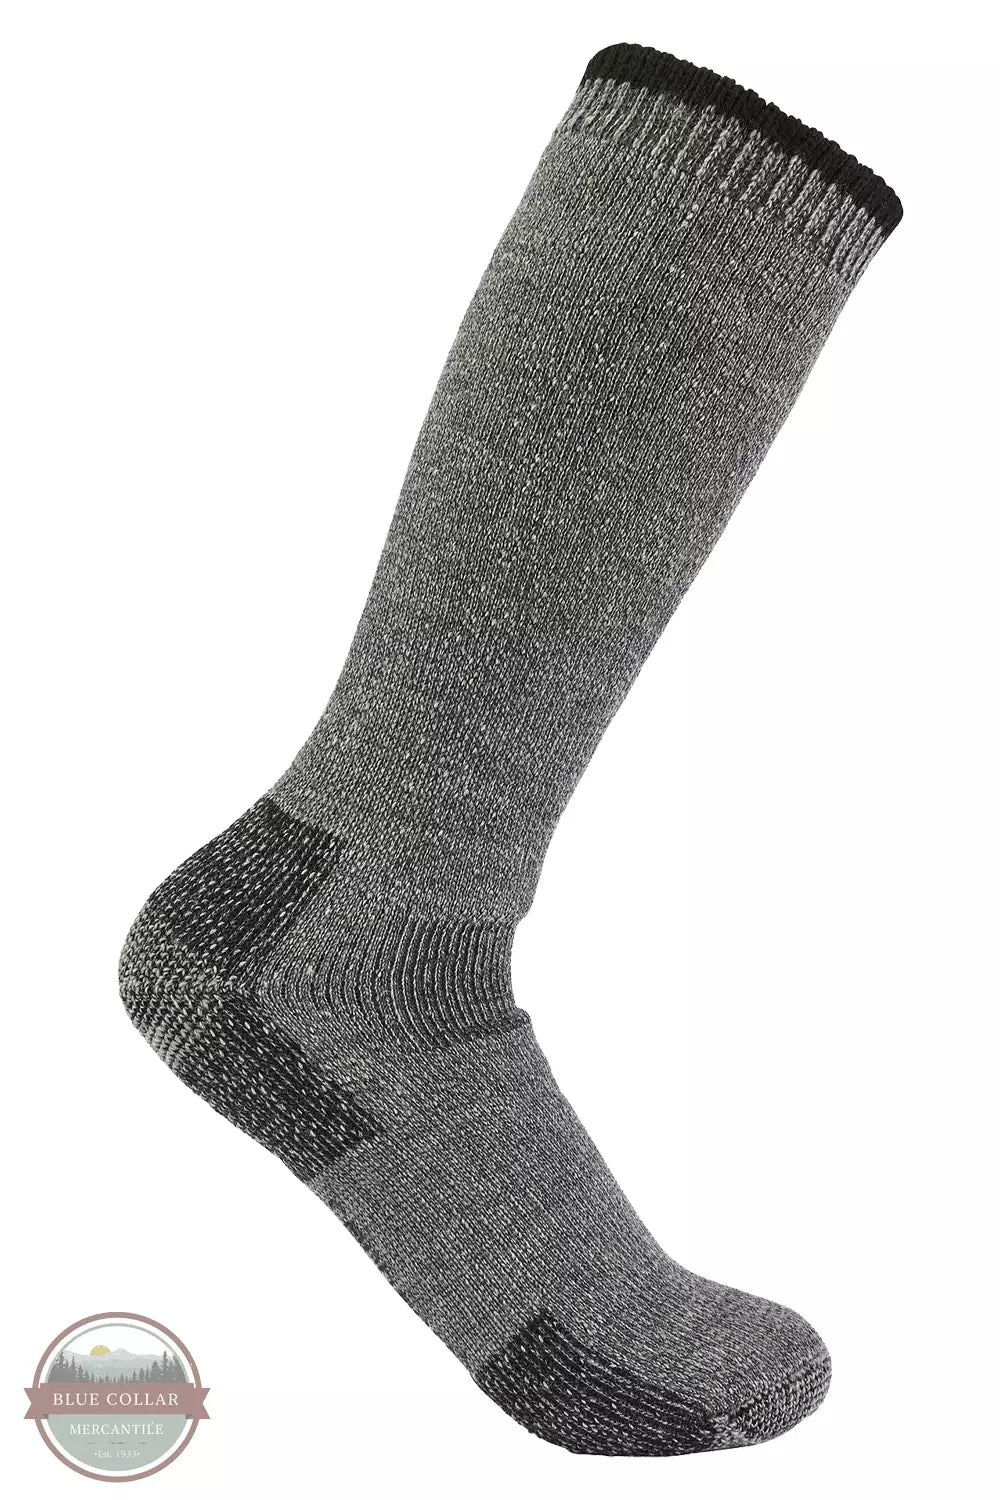 Carhartt SB39150M Heavyweight Wool Blend Boot Sock Charcoal Side View